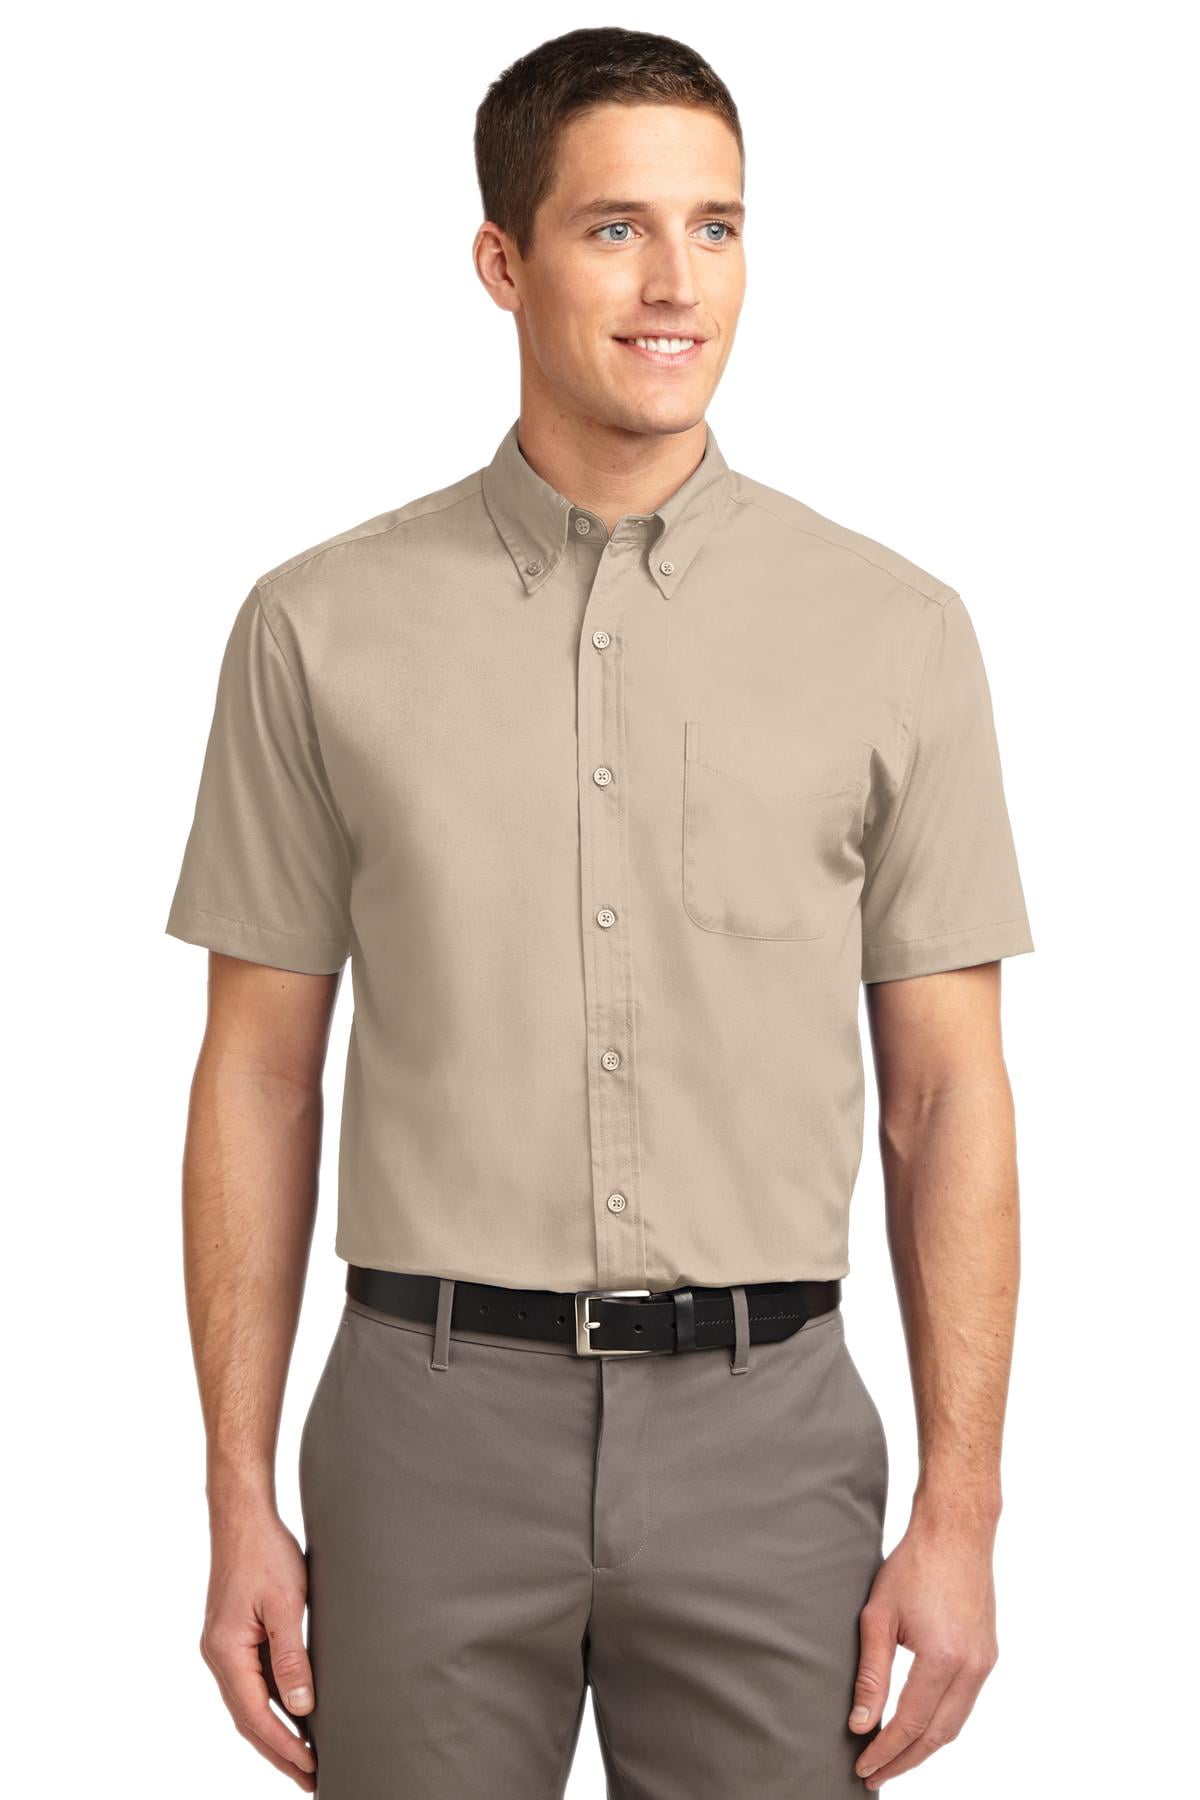 White/Lt Stone Port Authority Short Sleeve Easy Care Shirt